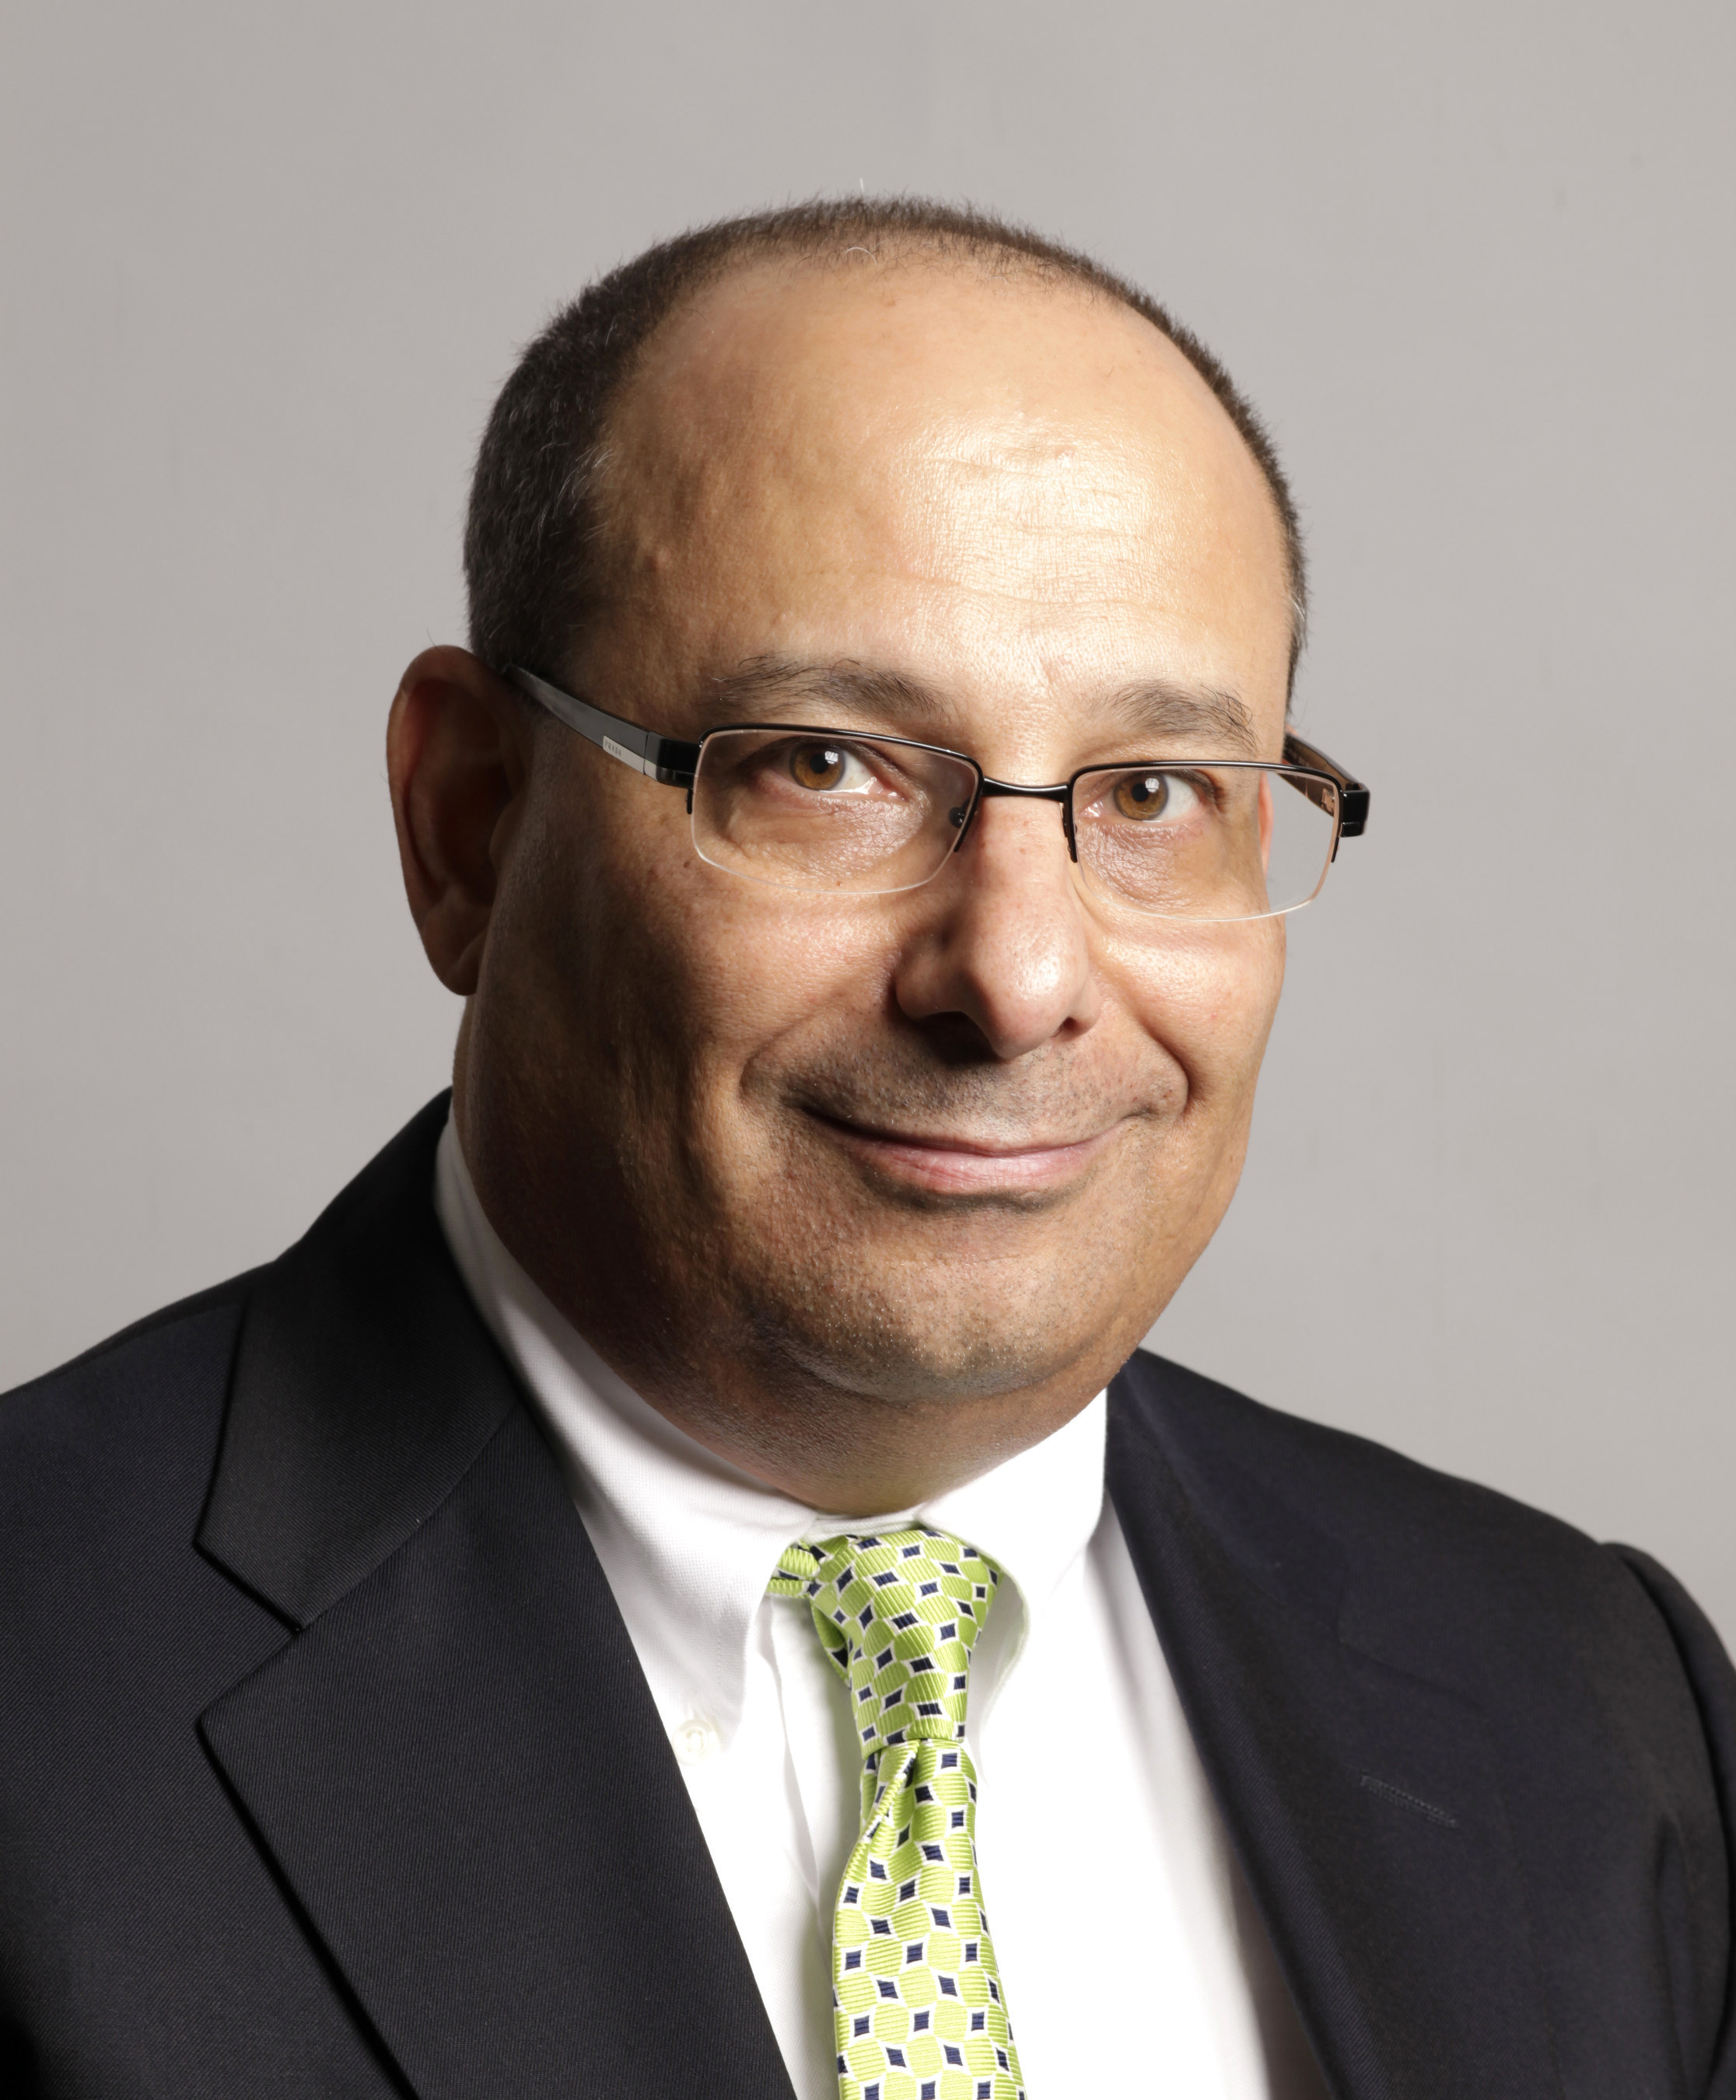 Nicholas Masucci, current president and CEO